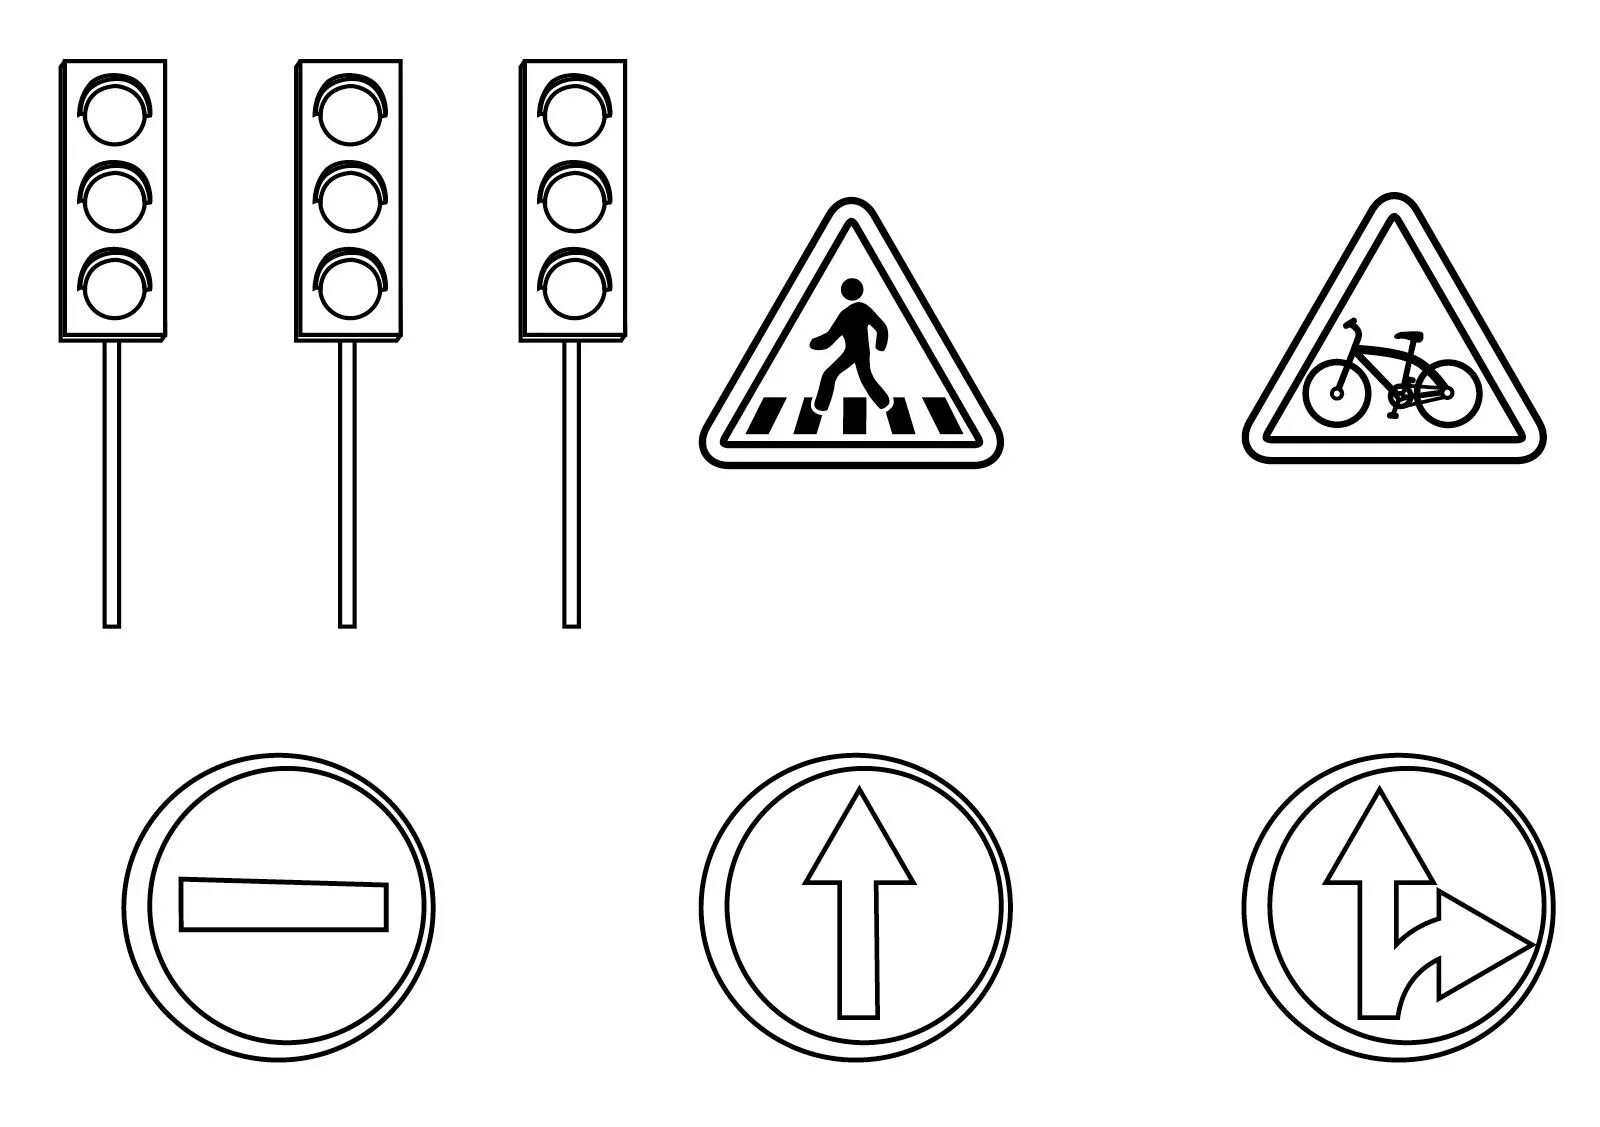 Sign traffic light #10